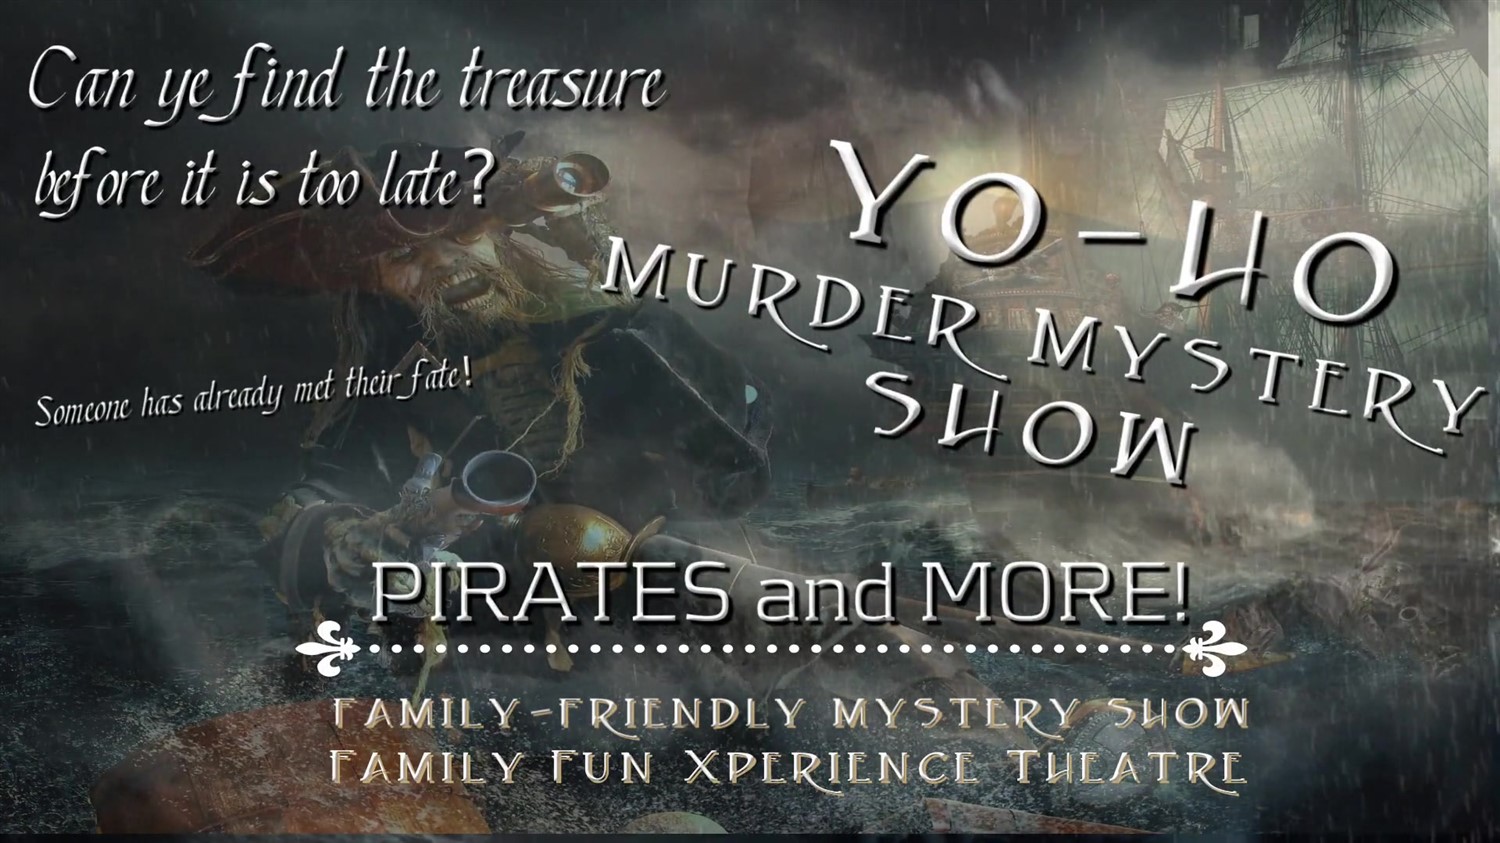 Whodunit? YO HO PIRATES Murder Mystery + Game Show on oct. 29, 18:00@FFX Theatre - Choisissez un siège,Achetez des billets et obtenez des informations surFamily Fun Xperience tickets.ffxshow.org